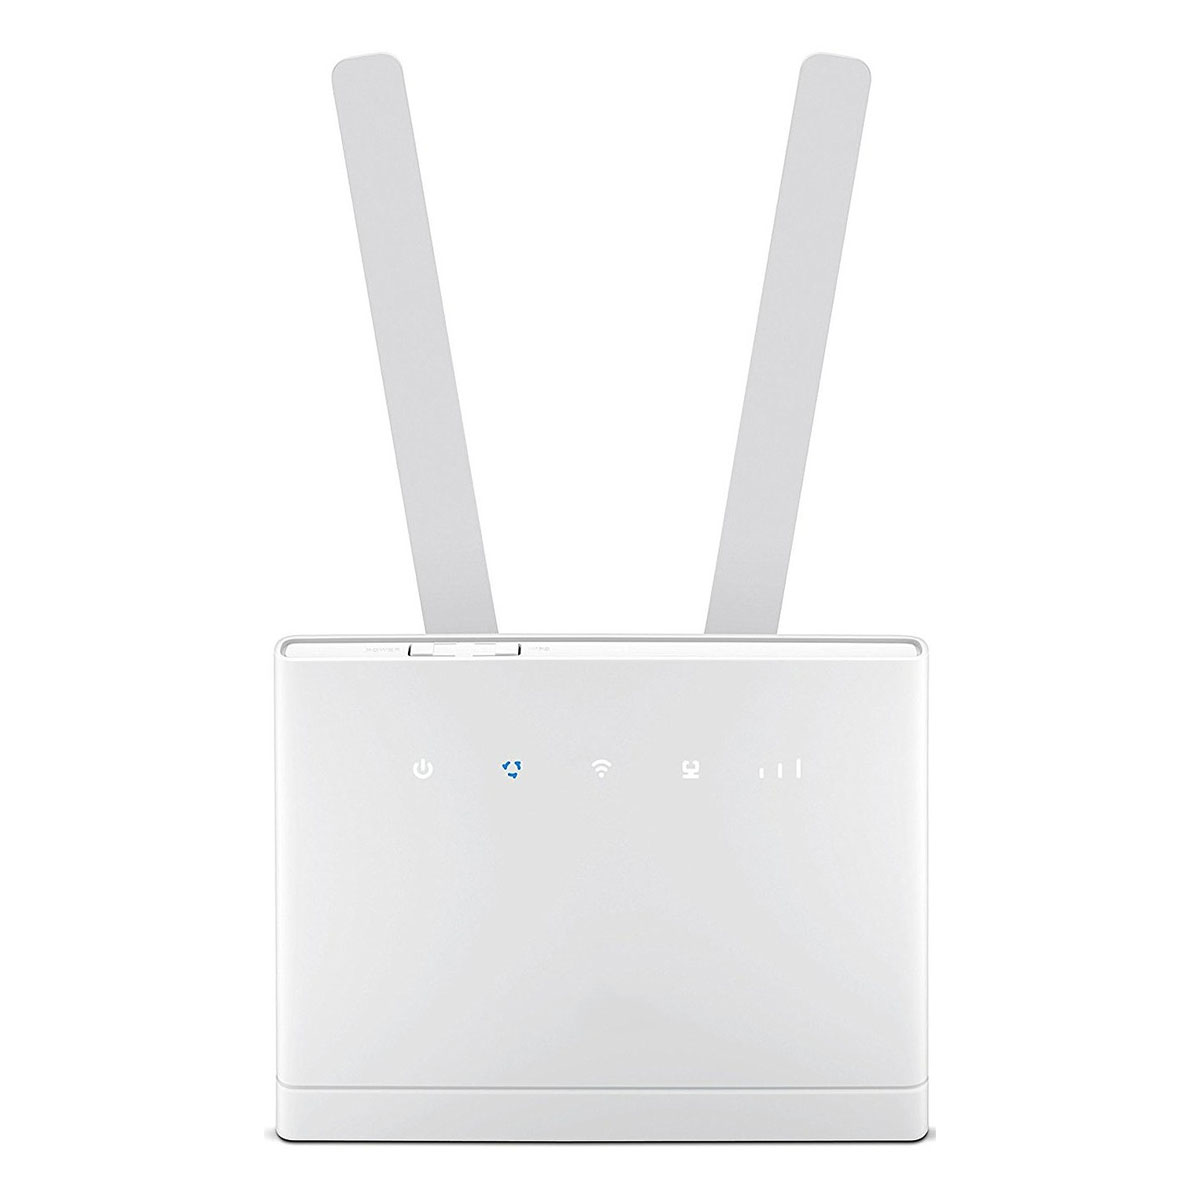 3G, 4G, LTE модем, Wi-Fi роутер, маршрутизатор, интернет центр HUAWEI B315S-22, цвет белый